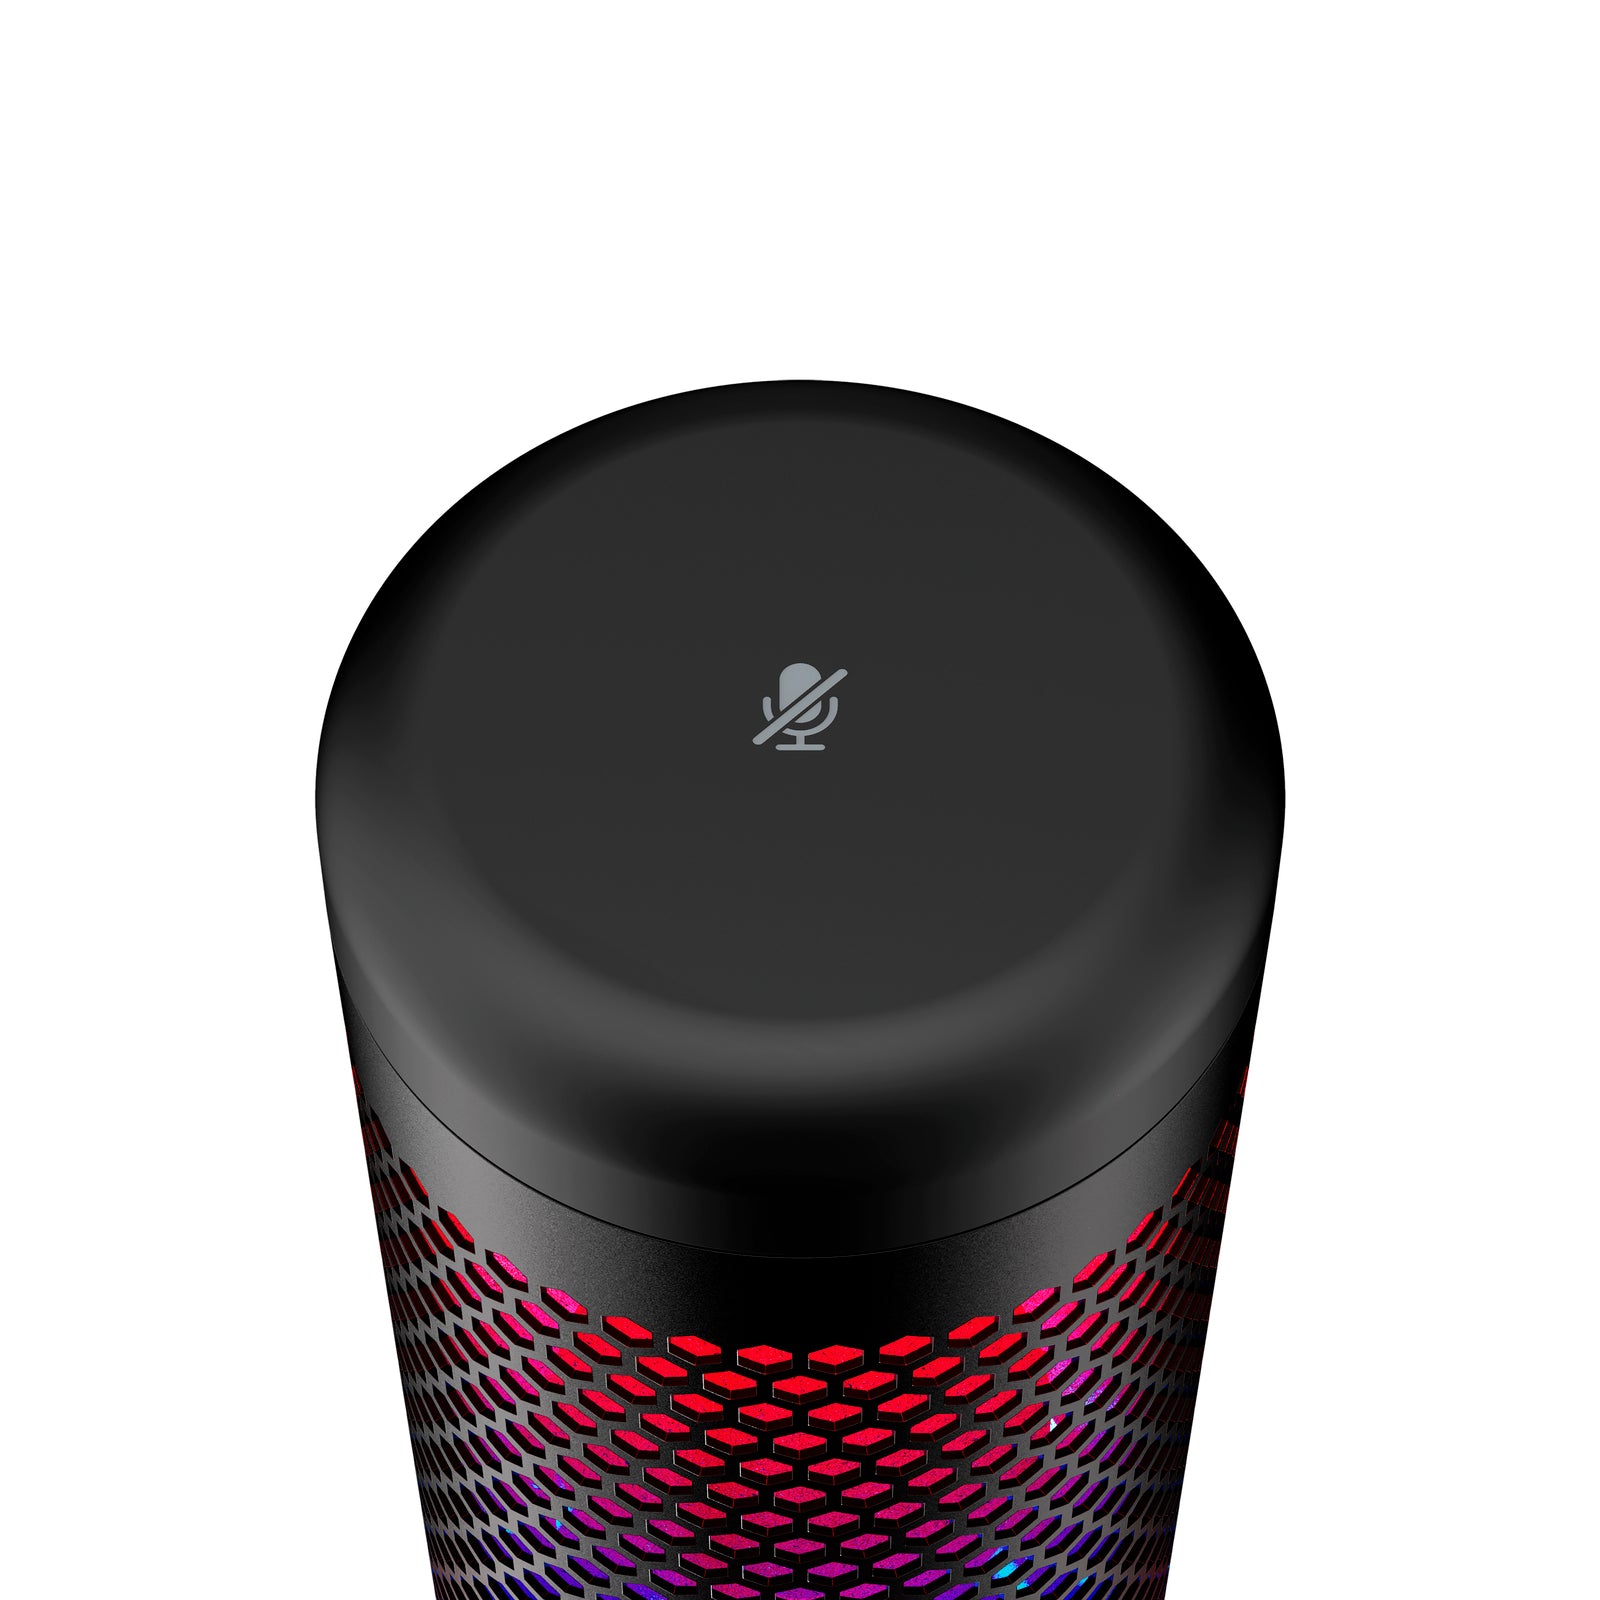 QuadCast S – USB Condenser Gaming Microphone | HyperX